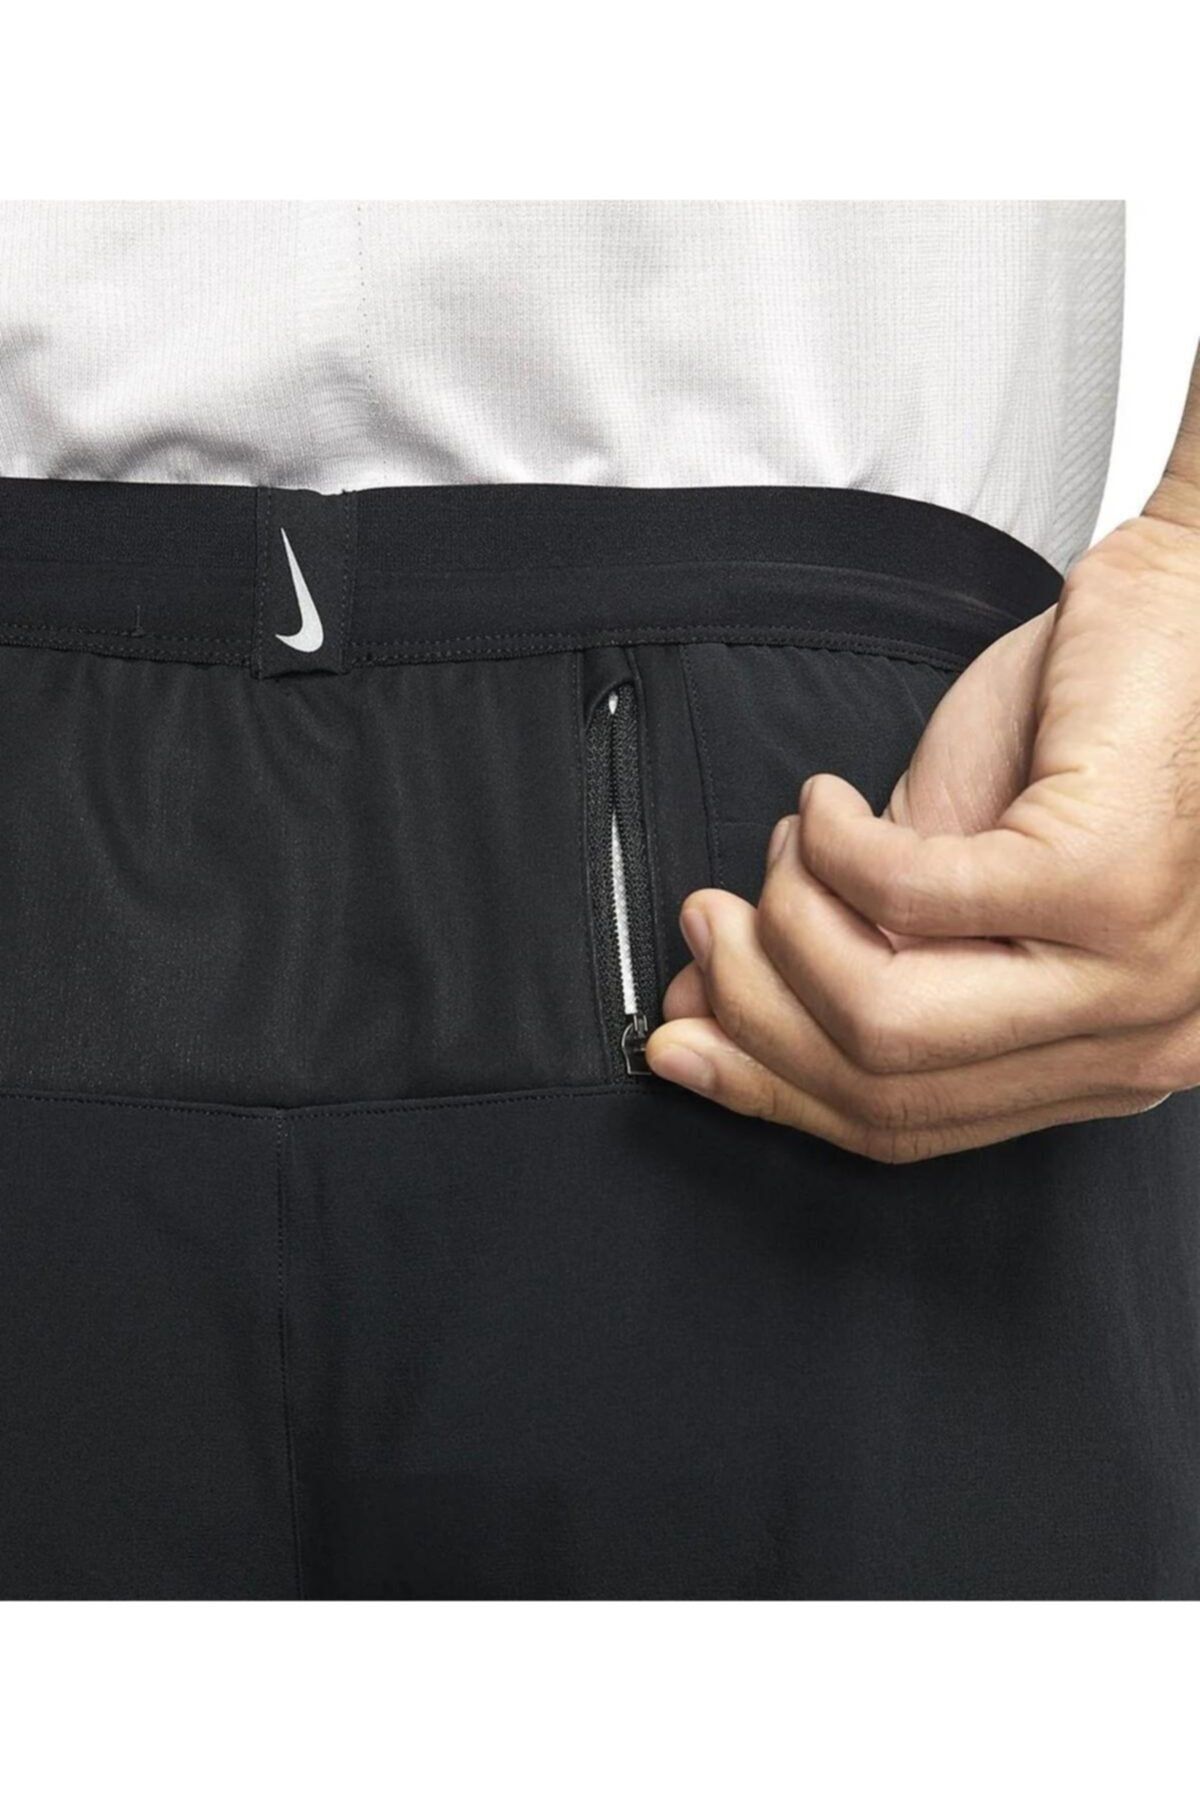 Nike Shield Phenom Authentic Mens Running Pants Size Medium Aj6711 010  Black for sale online